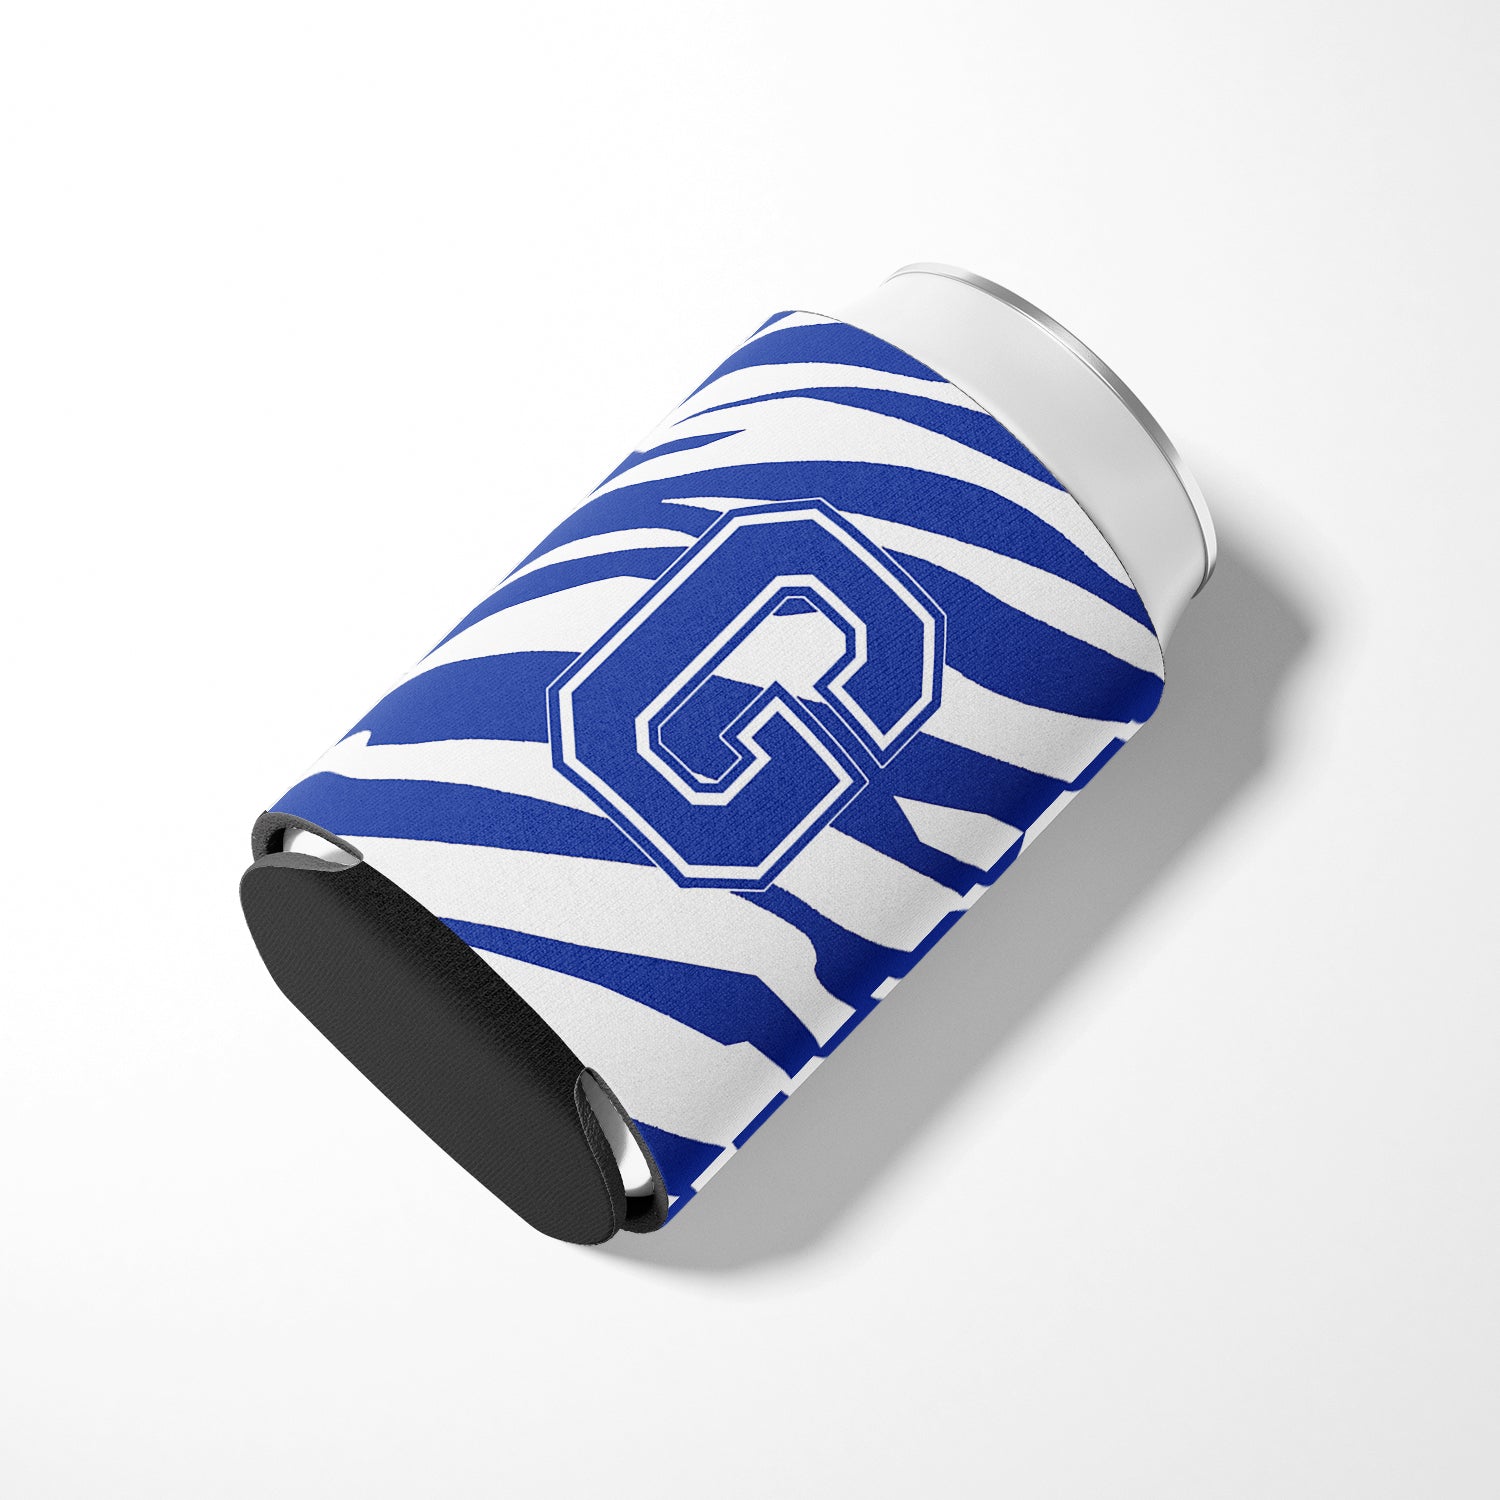 Letter G Initial Monogram - Tiger Stripe Blue and White Can Beverage Insulator Hugger